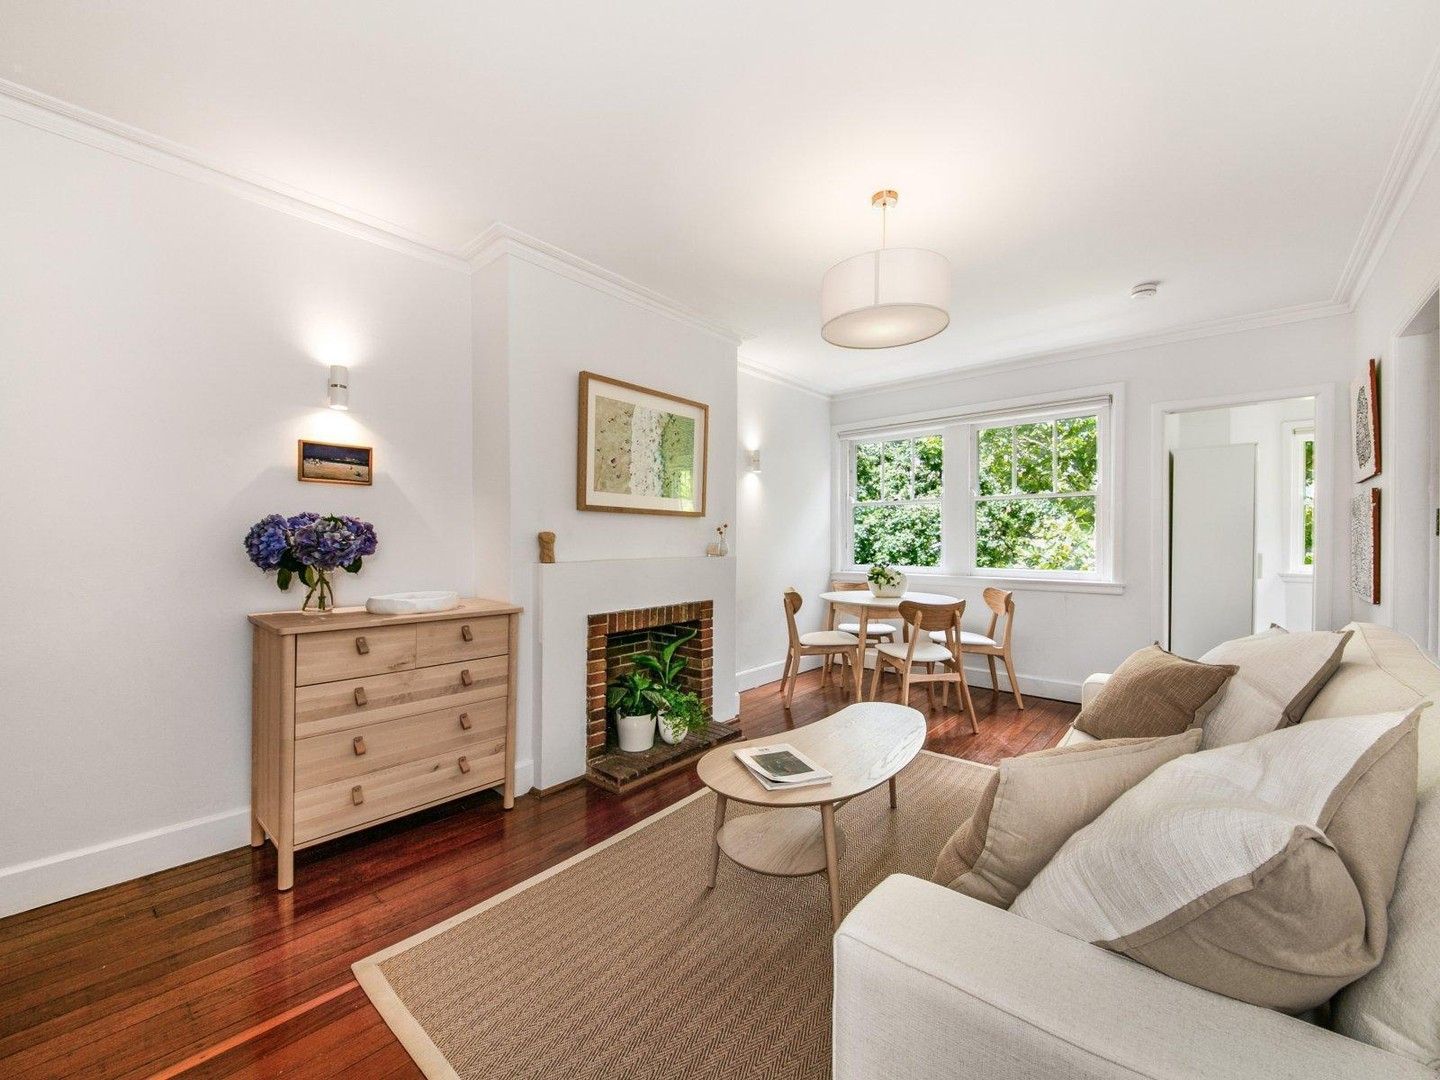 2 bedrooms Apartment / Unit / Flat in 9/85a Ocean Street WOOLLAHRA NSW, 2025